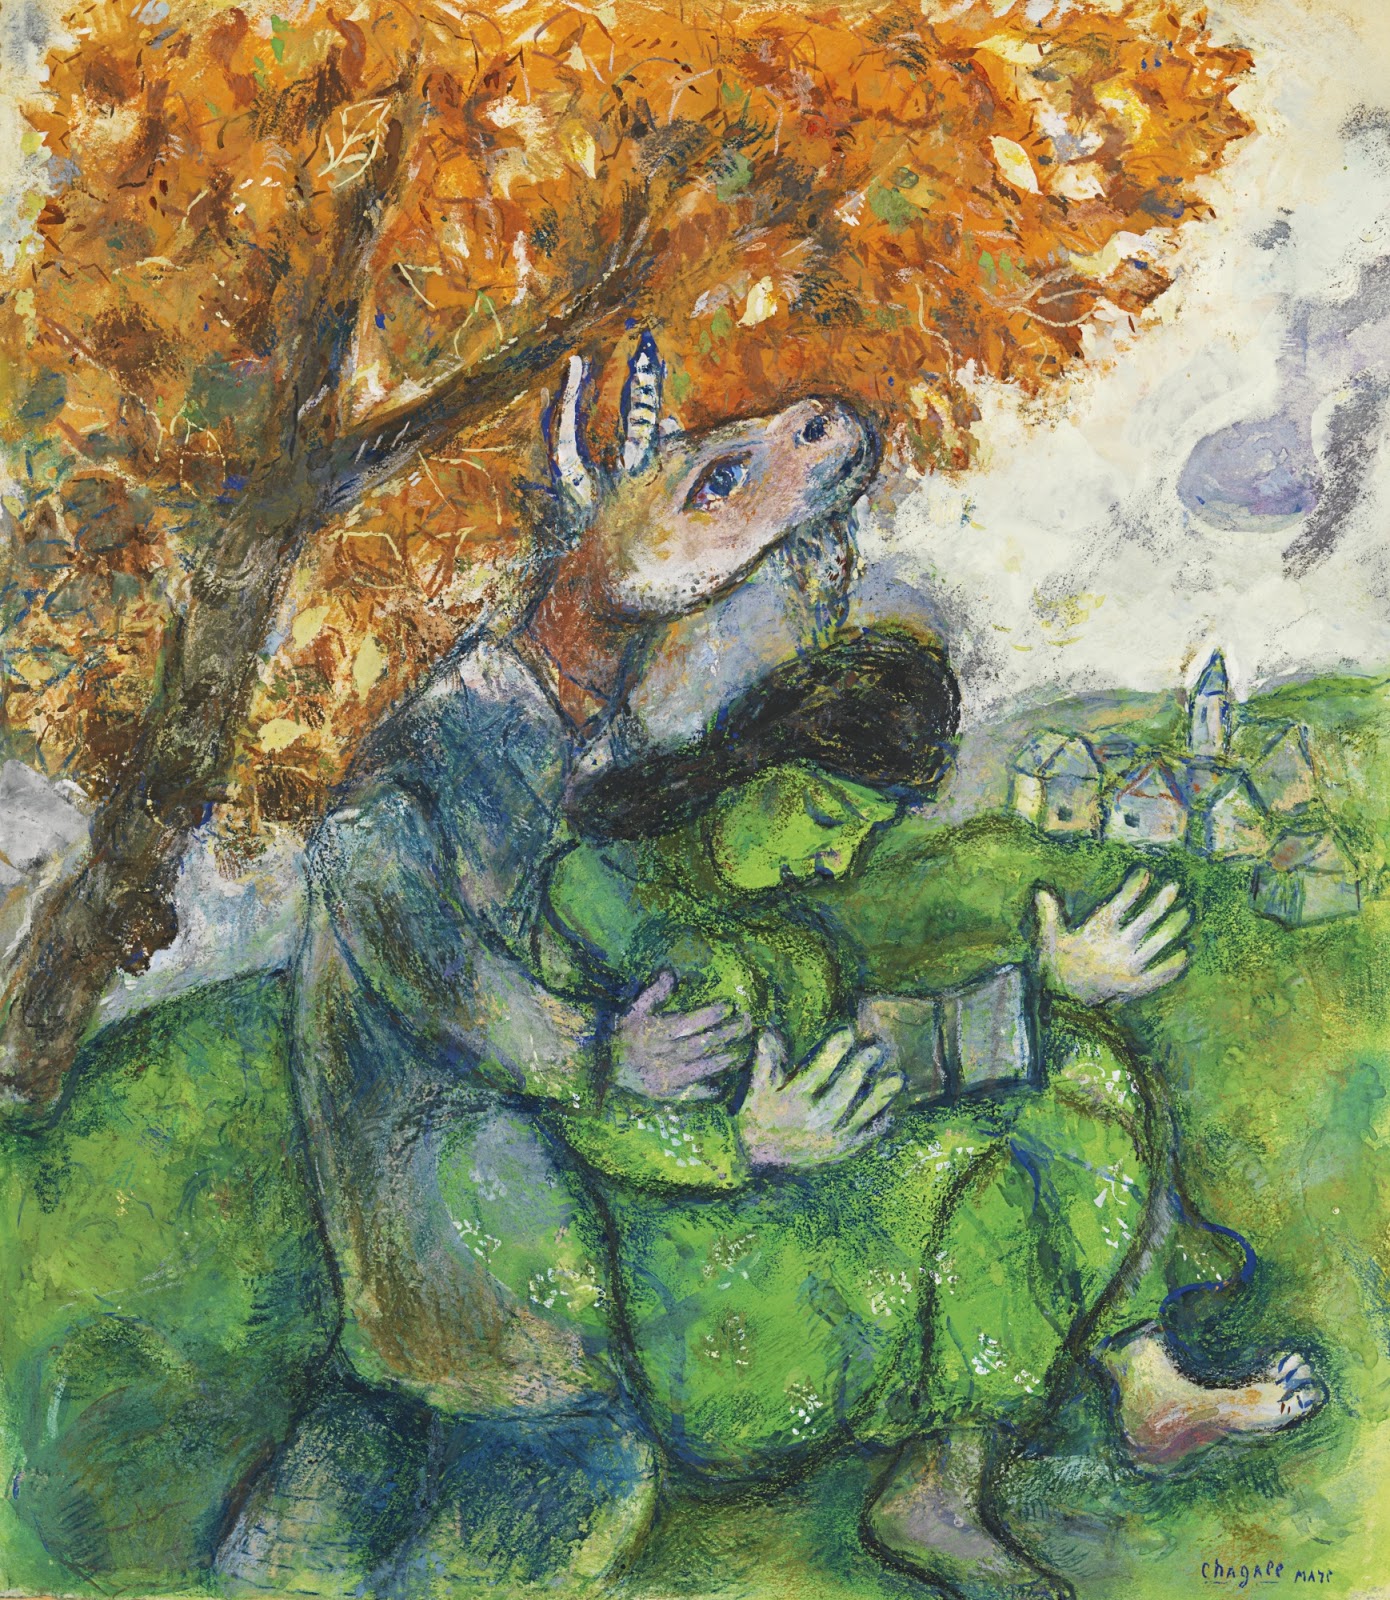 Marc+Chagall-1887-1985 (154).jpg